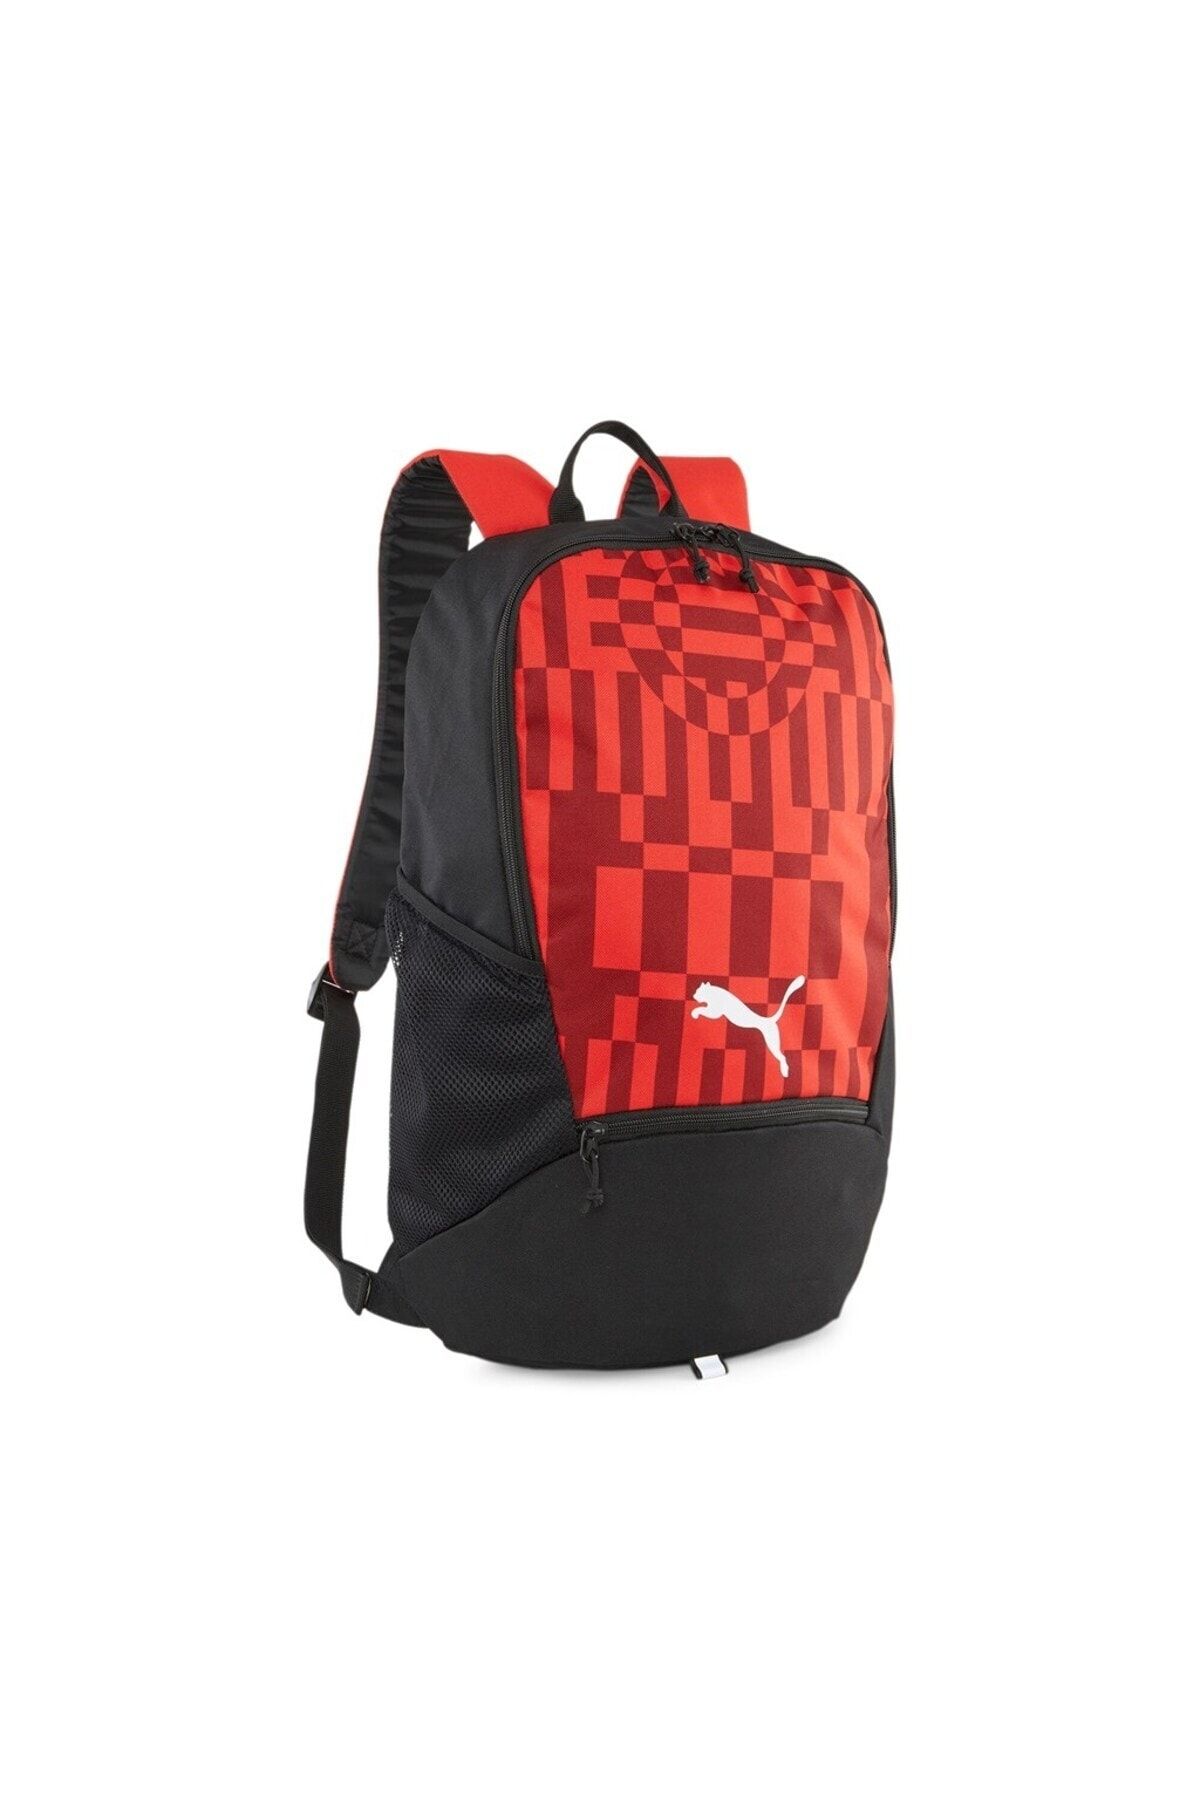 Puma Sırt Çantası individualRISE Backpack PUMA Red-PUMA Bl 07991101